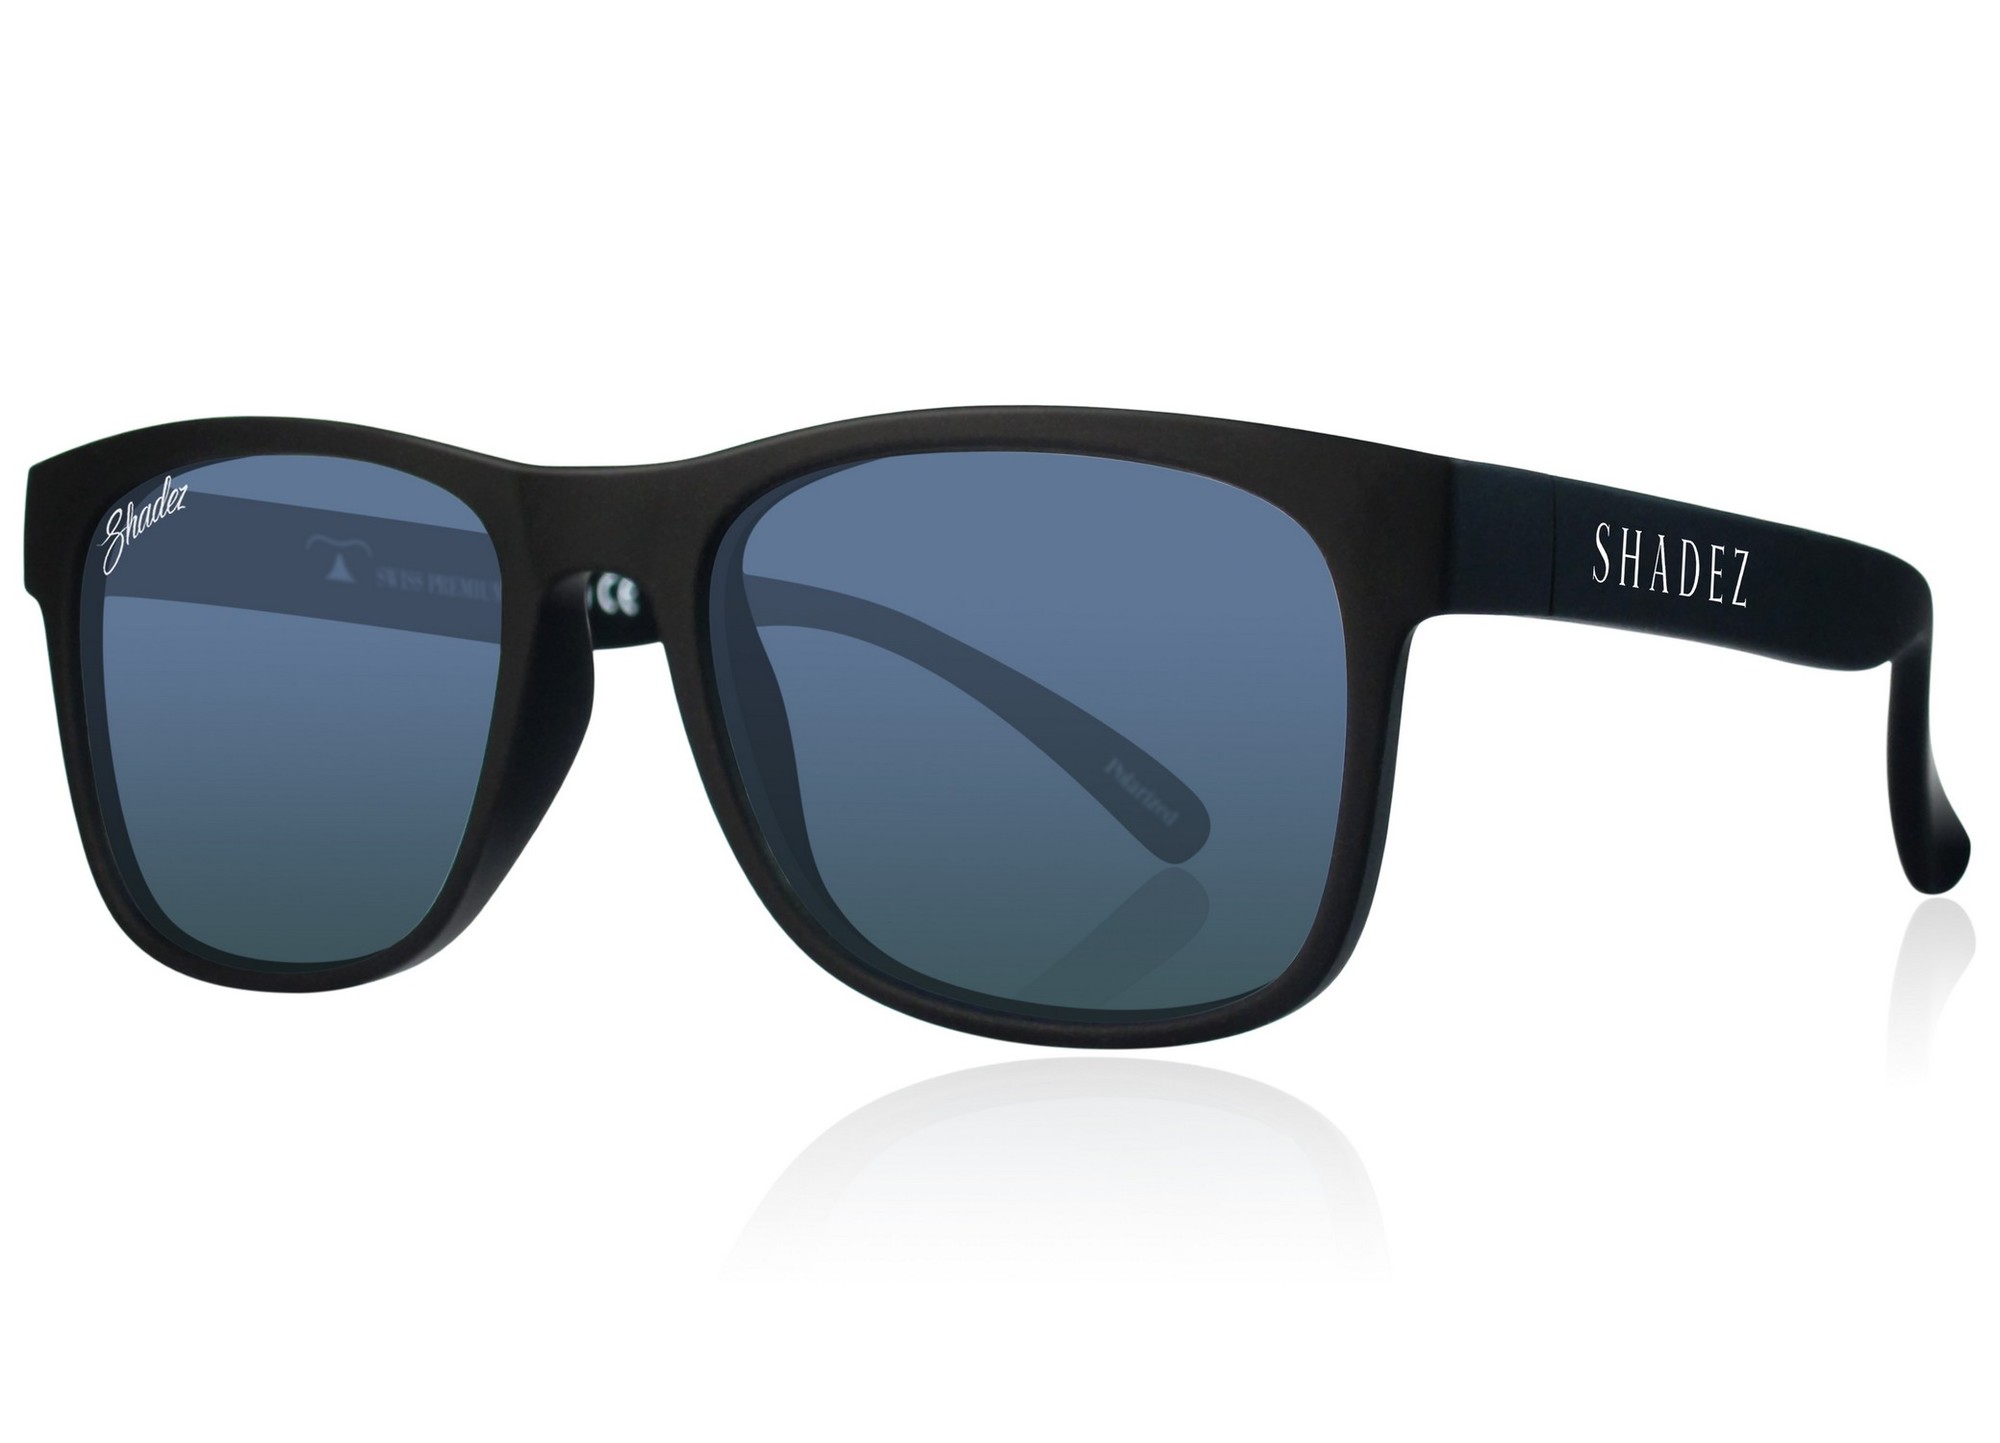 Shadez - polarized UV sunglasses for kids - VIP - Black/Black